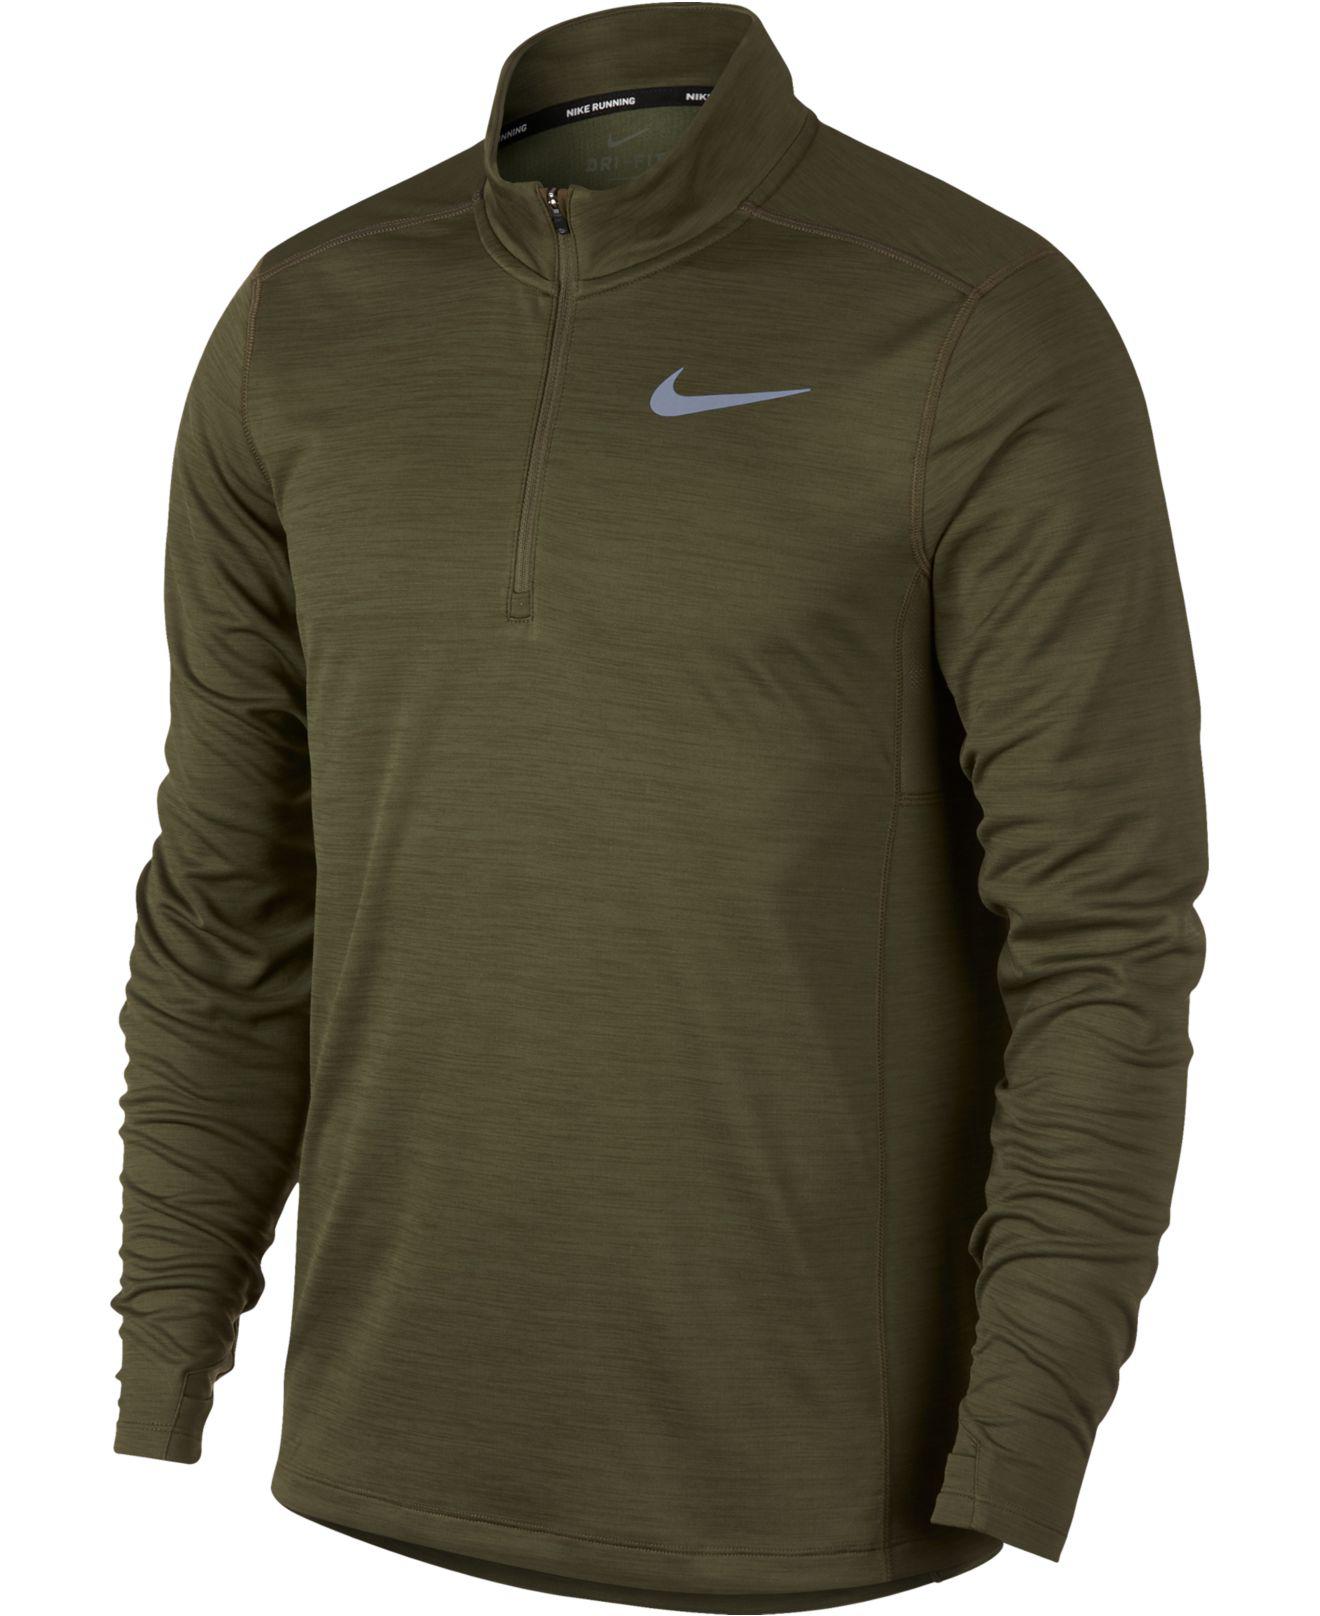 Lyst - Nike Pacer Dri-fit Half-zip Running Top in Green for Men